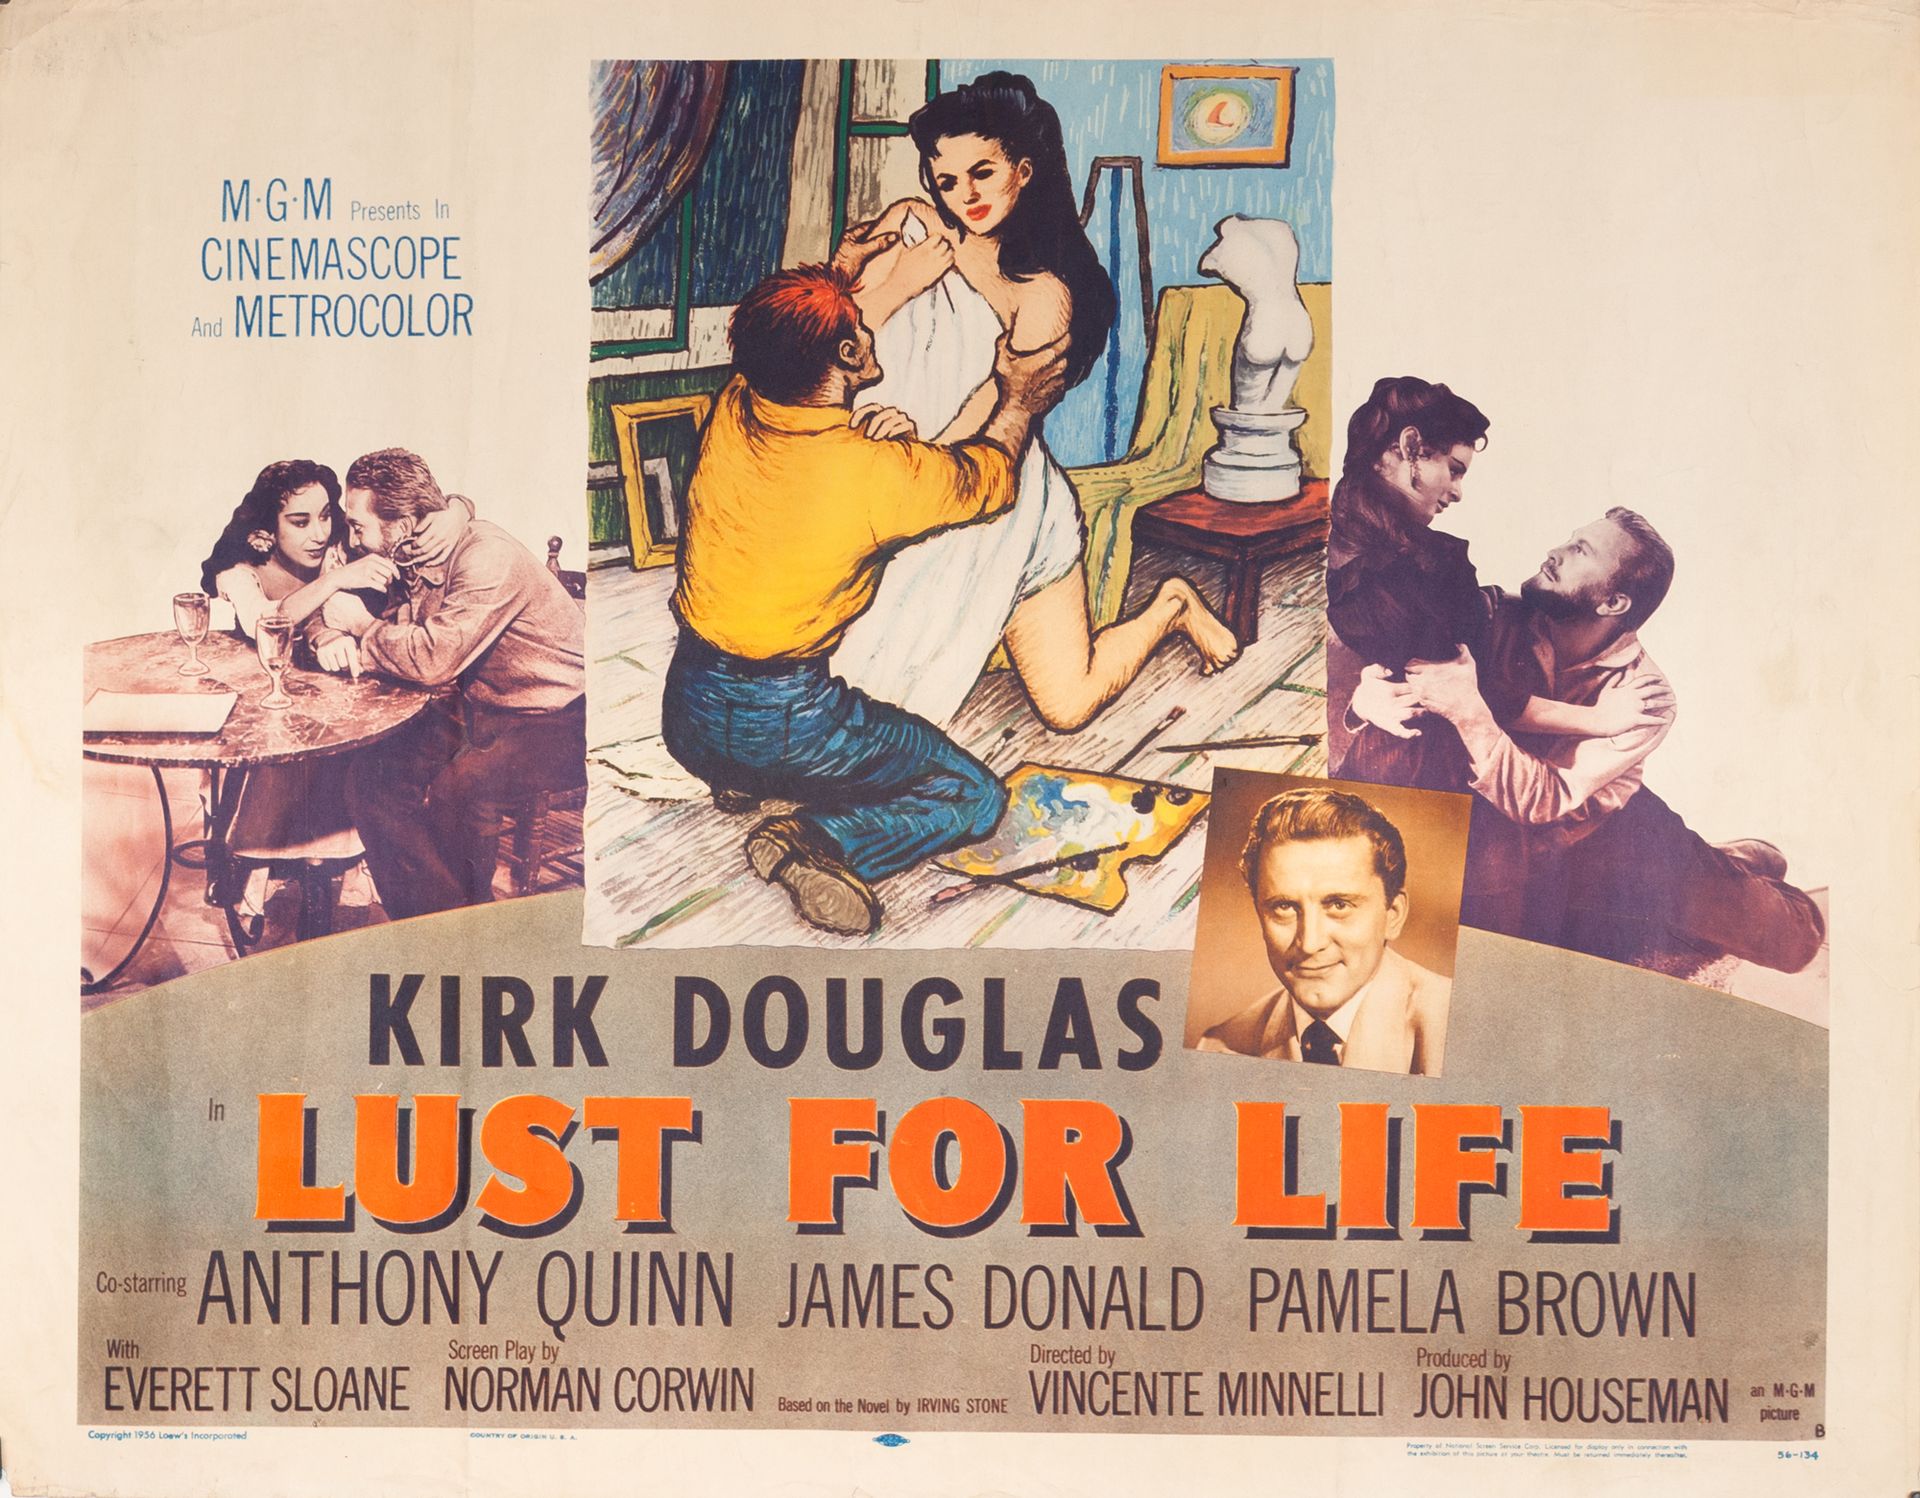 Null LUST FOR LIFE 文森特-明纳利。1956年。
55 x 71 cm。美国海报（半张）。无符号。没有印刷。
条件A-